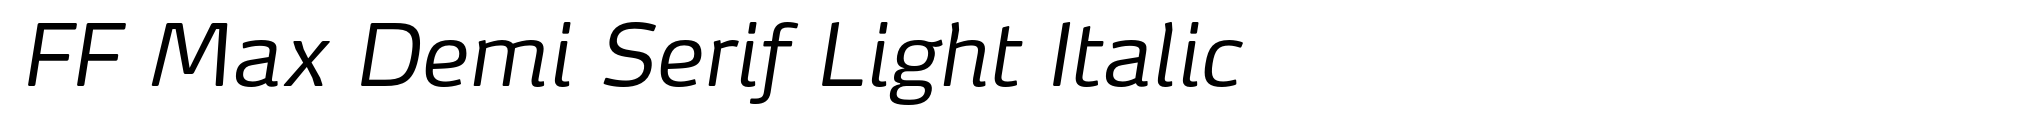 FF Max Demi Serif Light Italic image